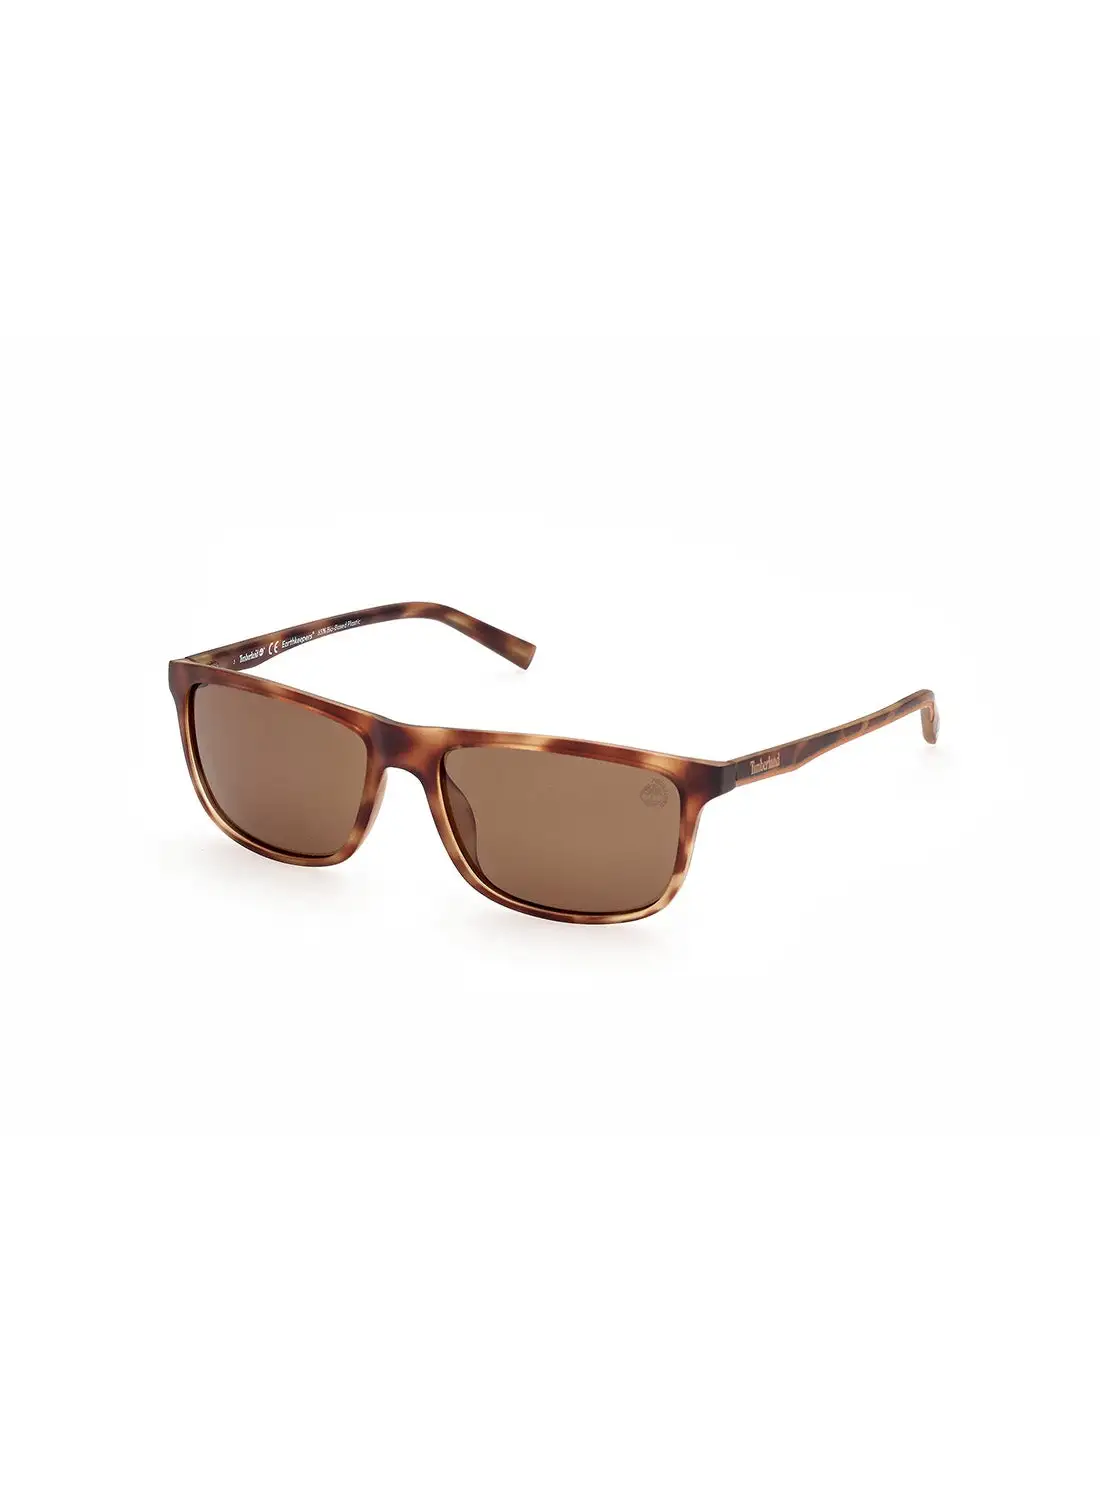 Timberland Men's Polarized Rectangular Sunglasses - TB926652H57 - Lens Size: 57 Mm